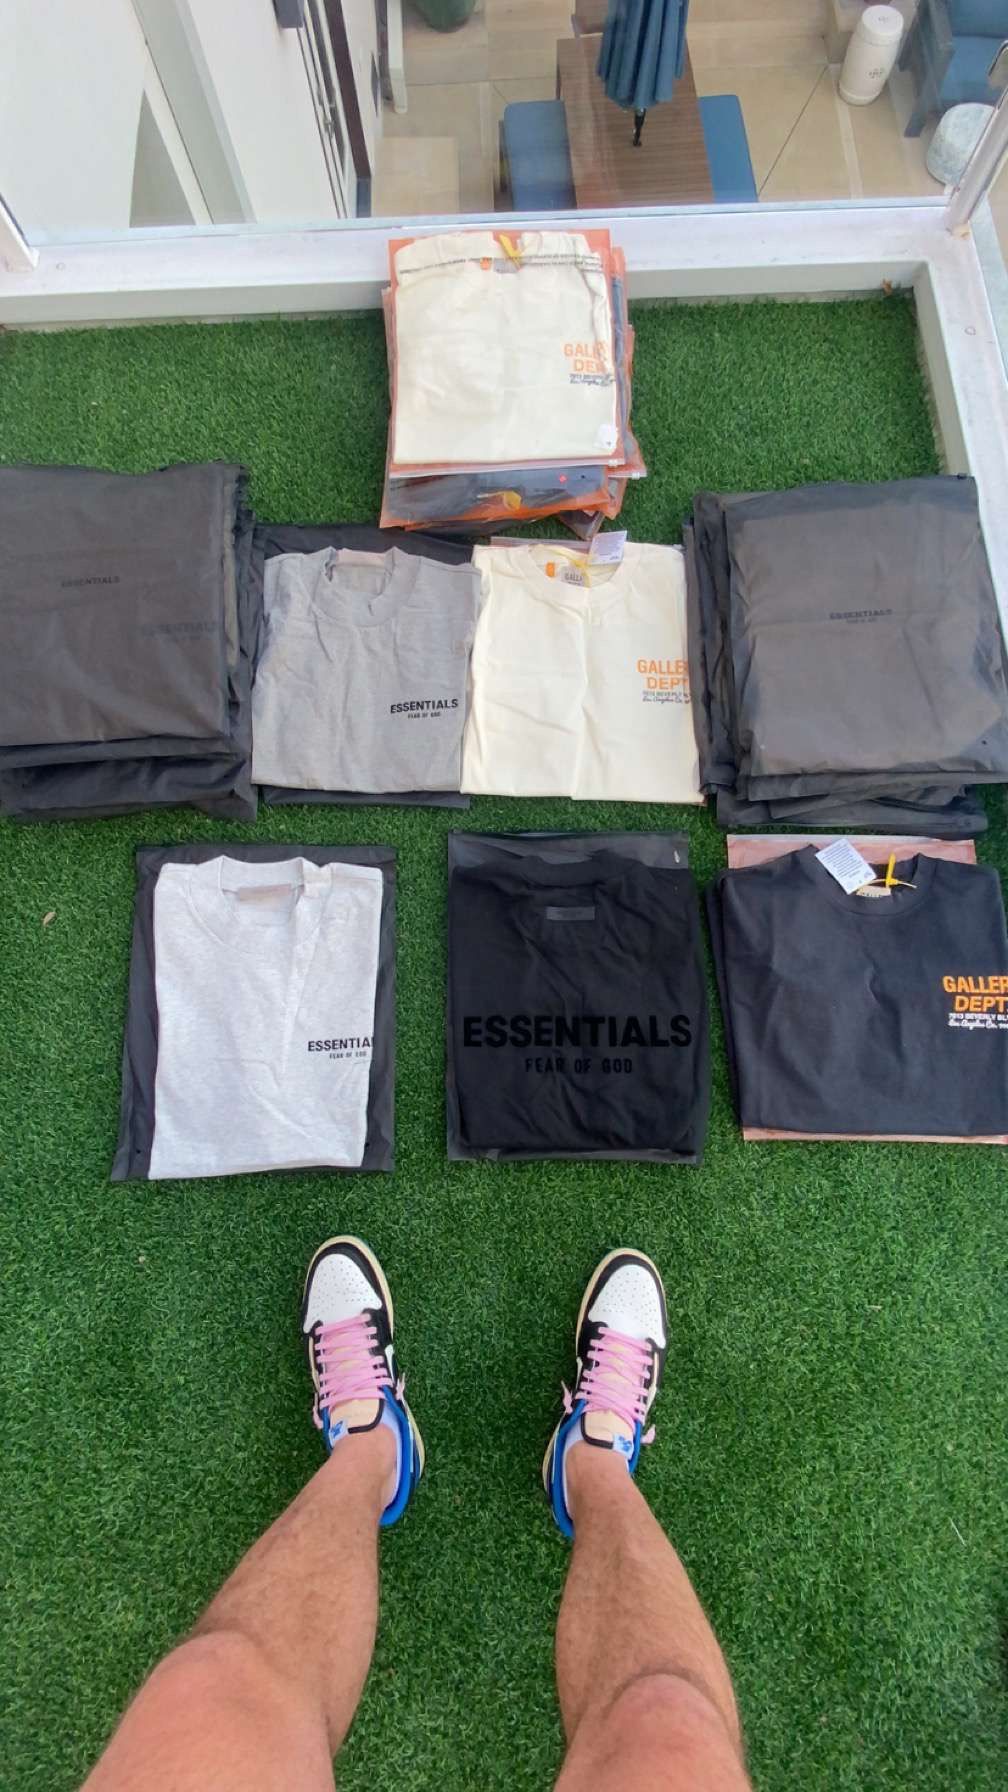 Essentials Shirts + Gallery Dept Shirts